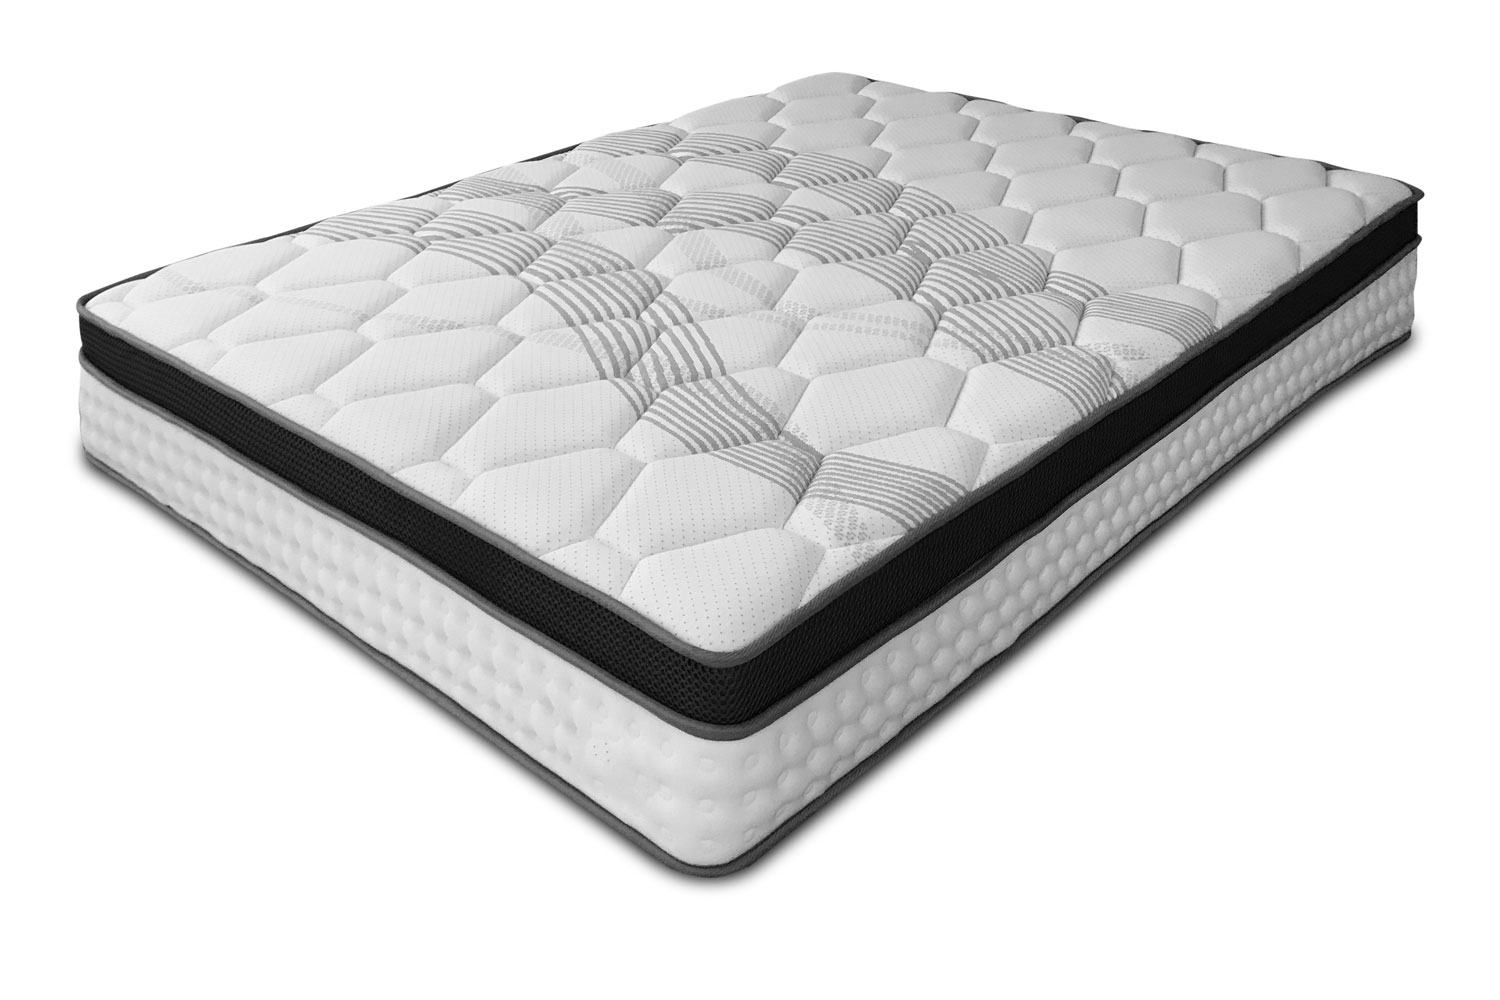 selectair mattress for sale